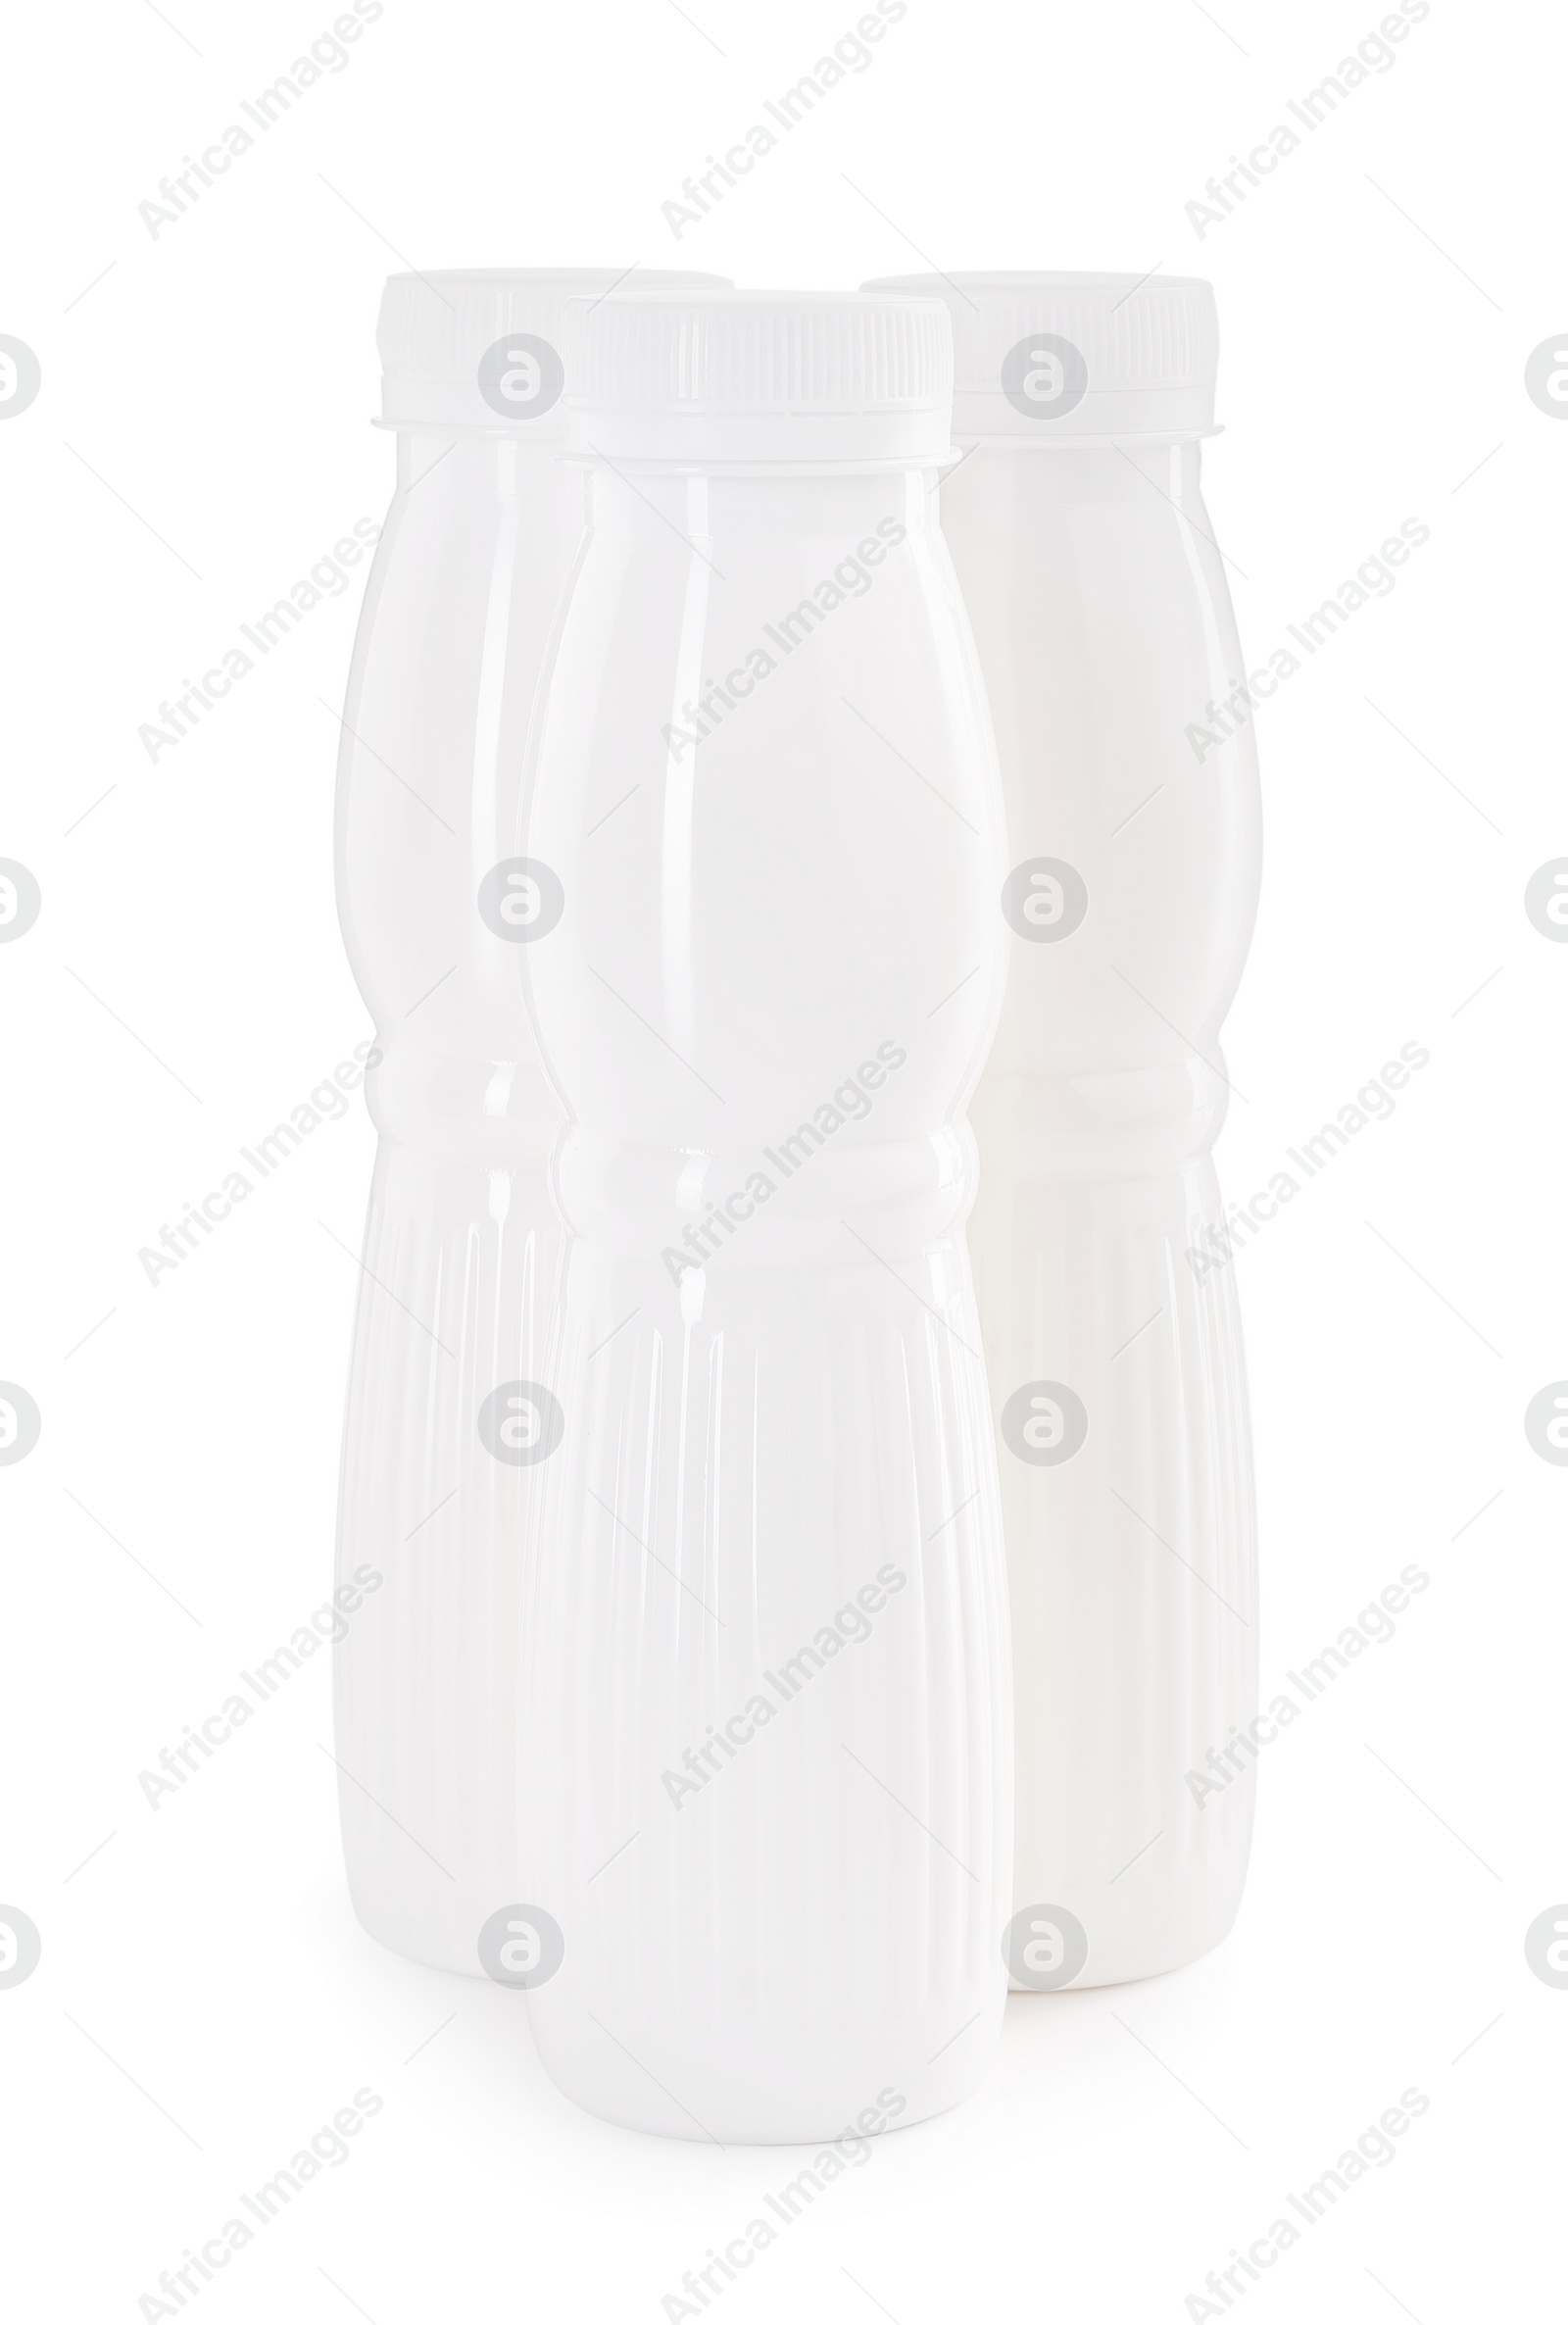 Photo of Tasty yogurt in bottles isolated on white